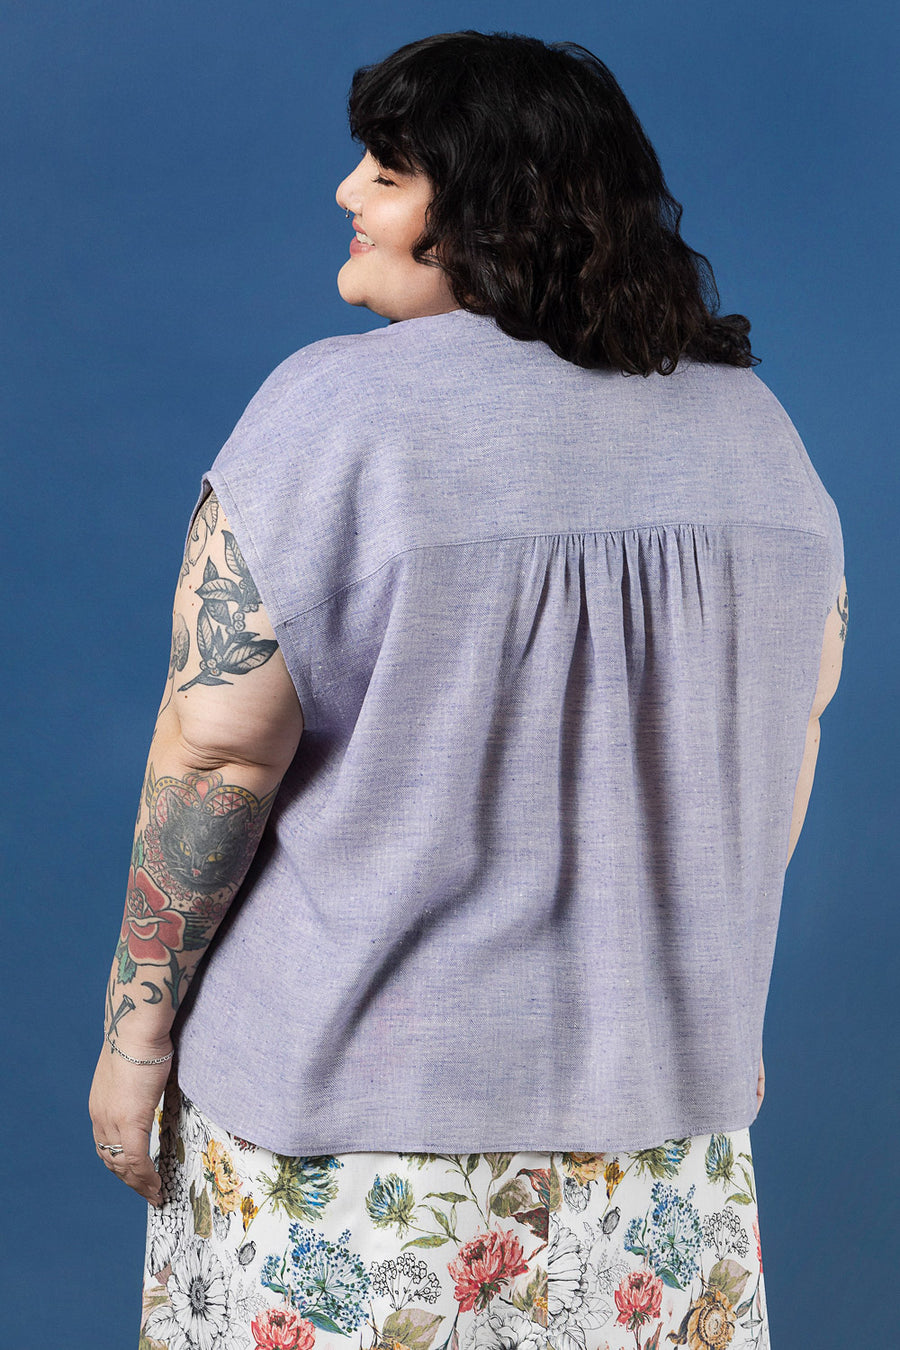 Periwinkle Plus-Size Shirt Pattern | Closet Core Crew